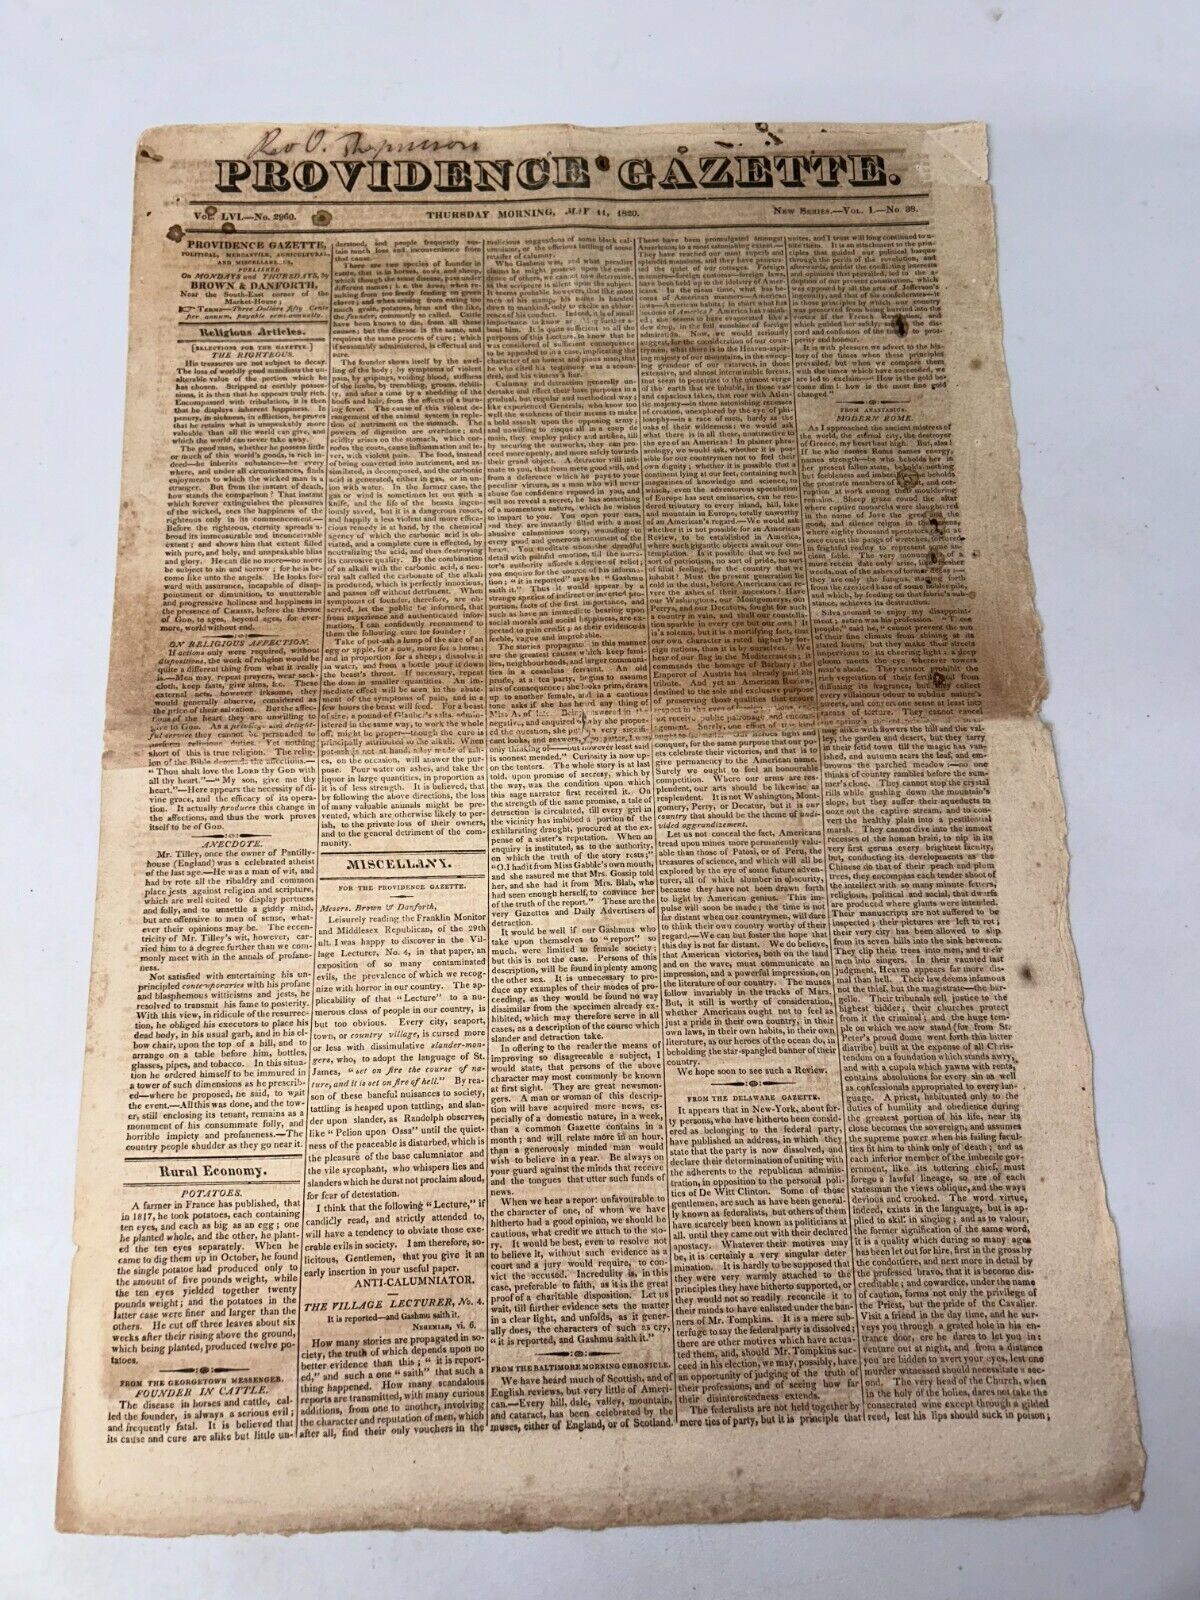 Providence Gazette May 11, 1820 Vol LVI No. 2960 (Vol 1 No. 38) Newspaper